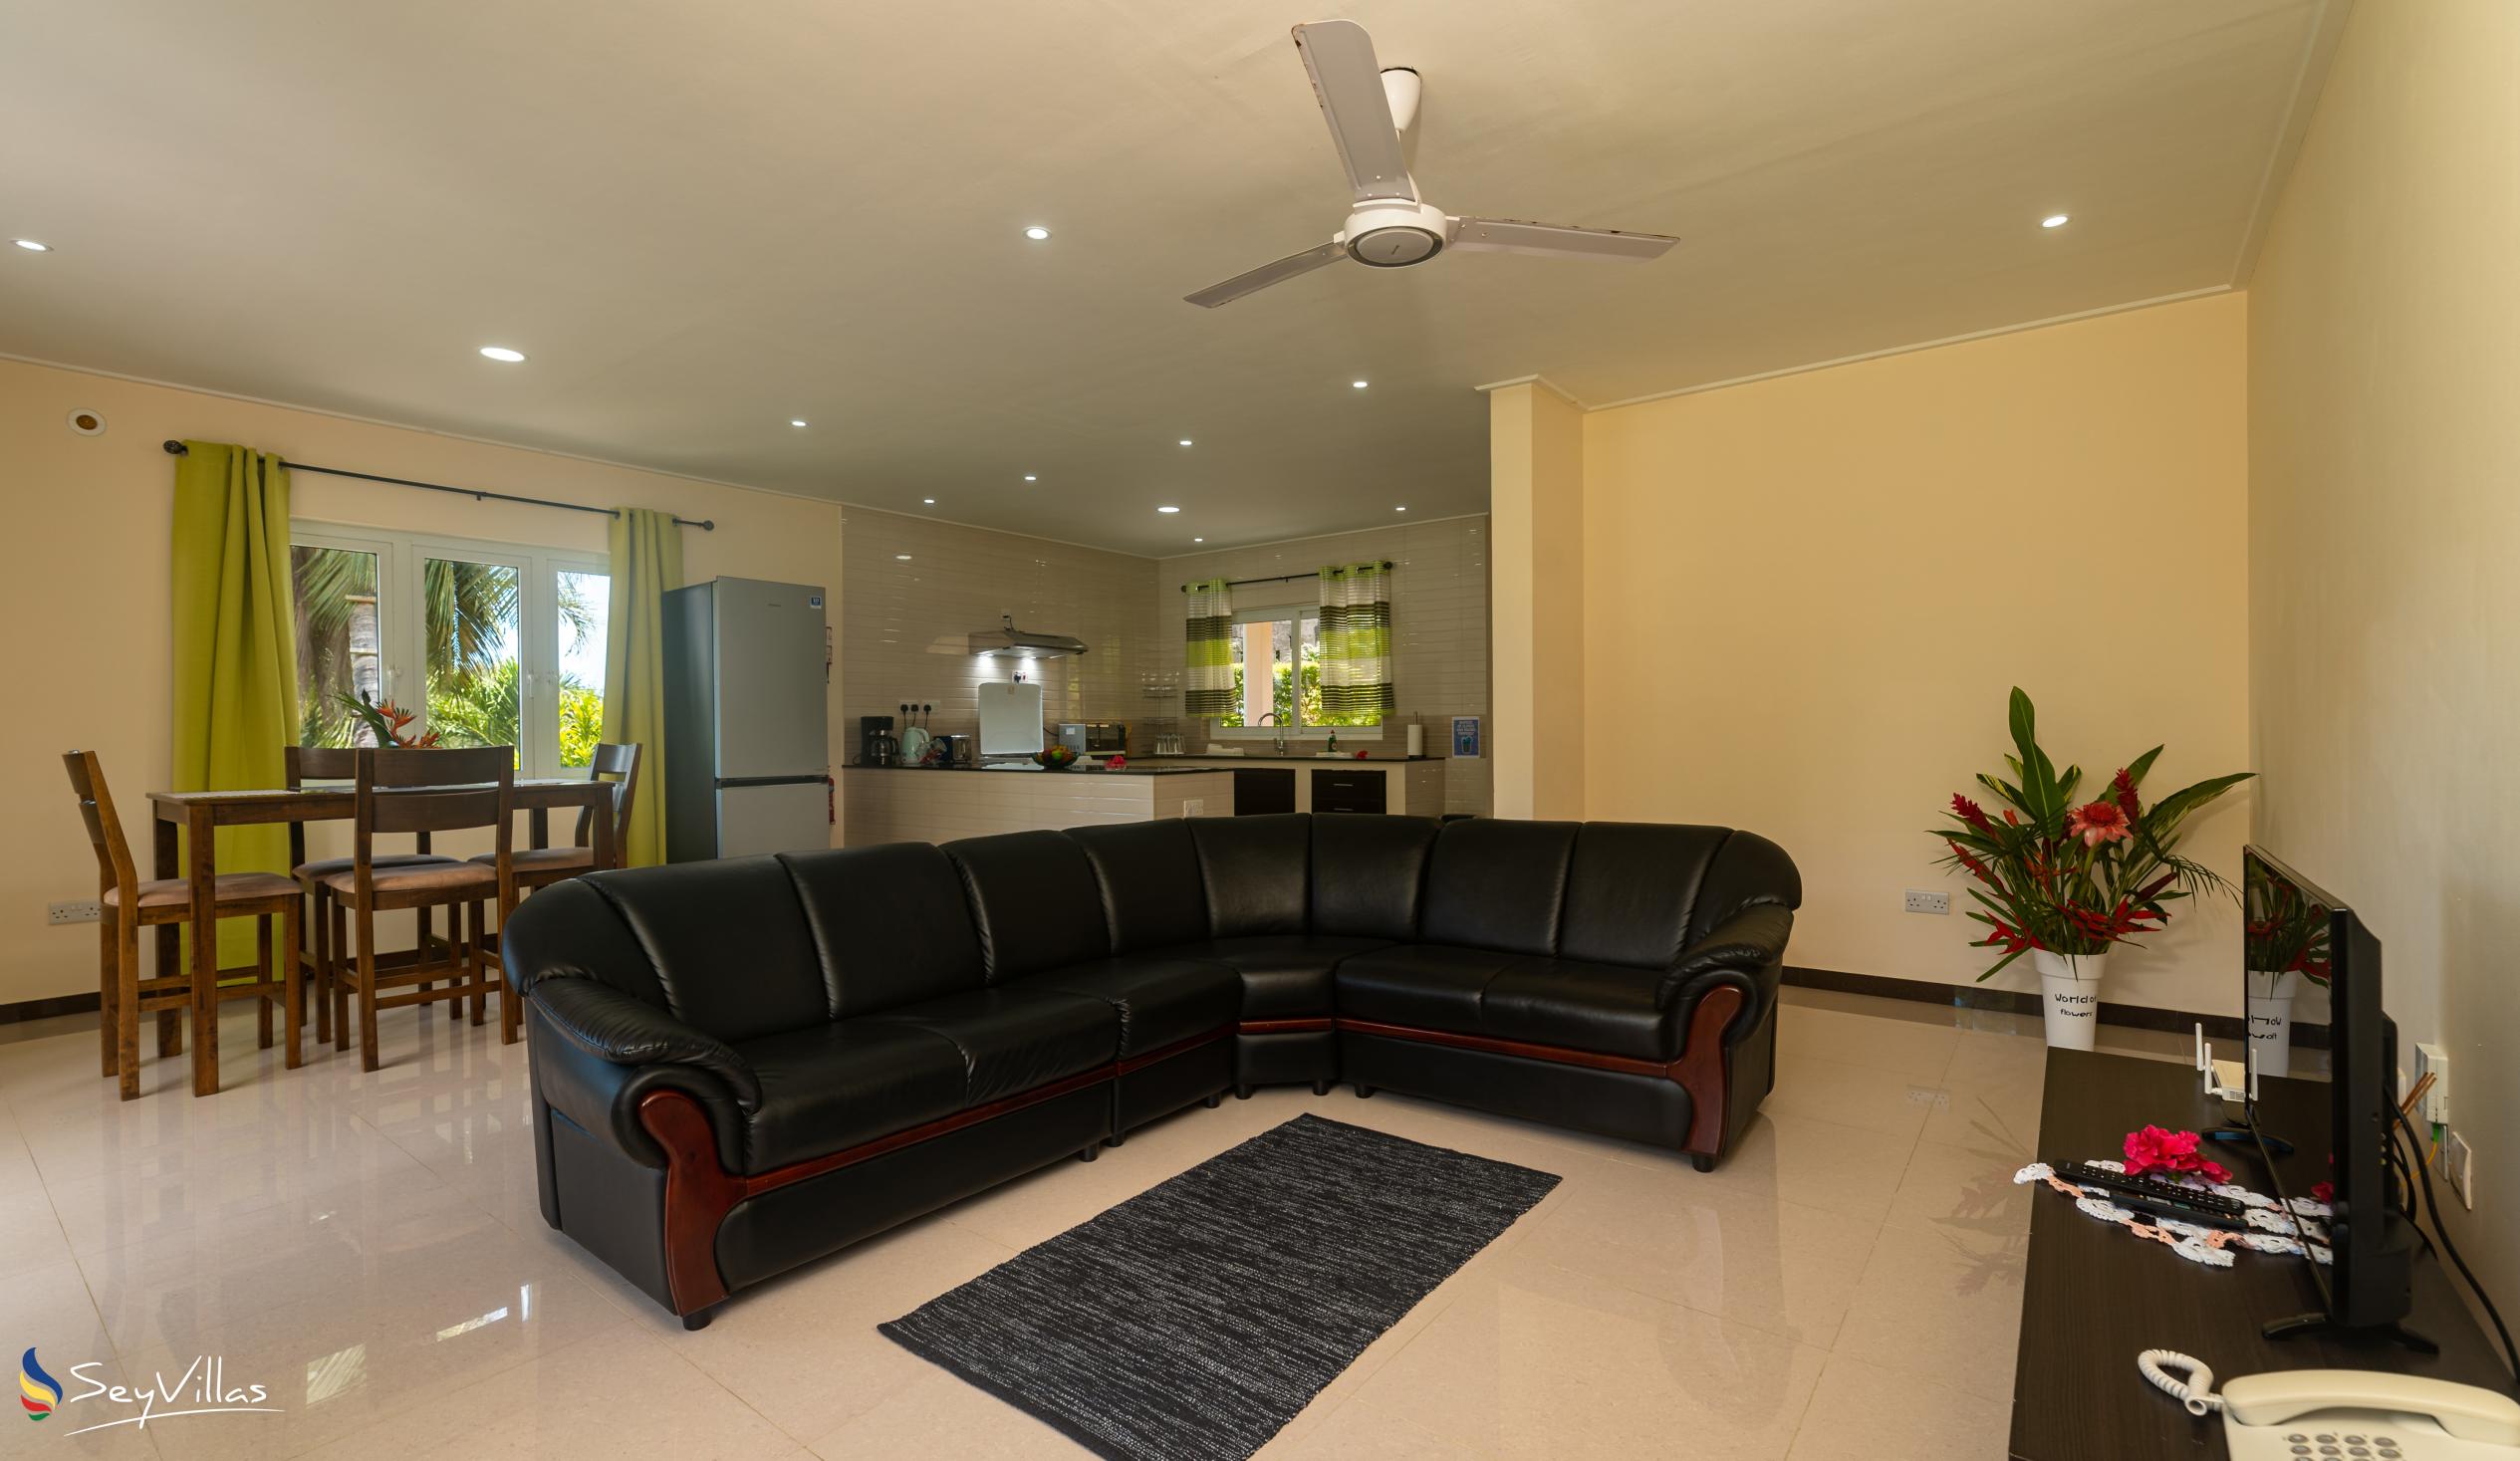 Foto 35: JAIDSS Holiday Apartments - Appartamento con 2 camere - Mahé (Seychelles)